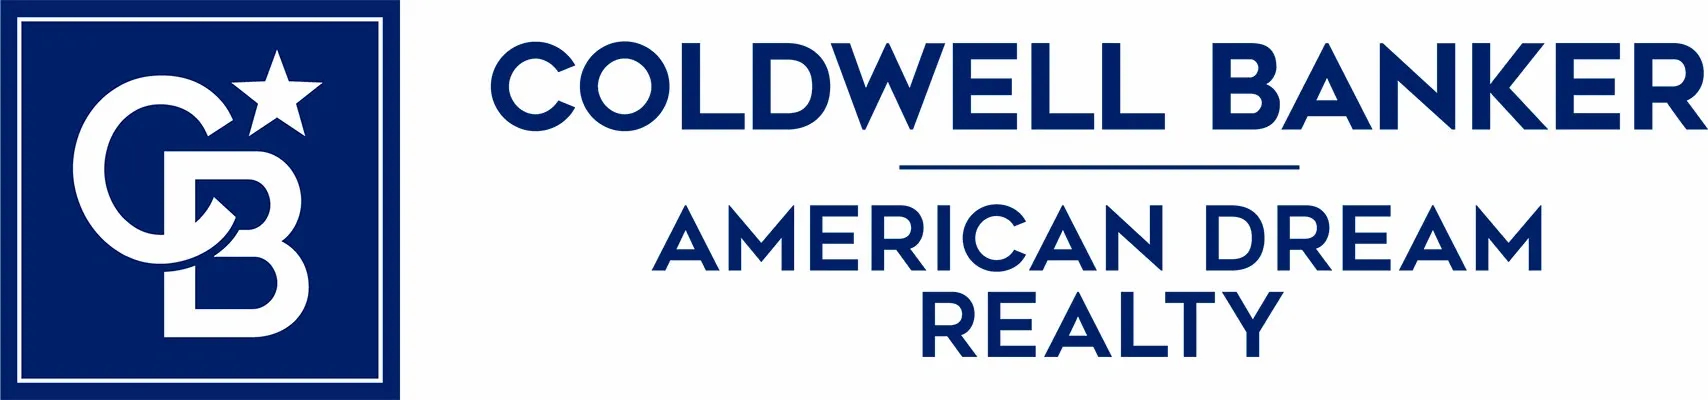 Coldwell Banker American Dream